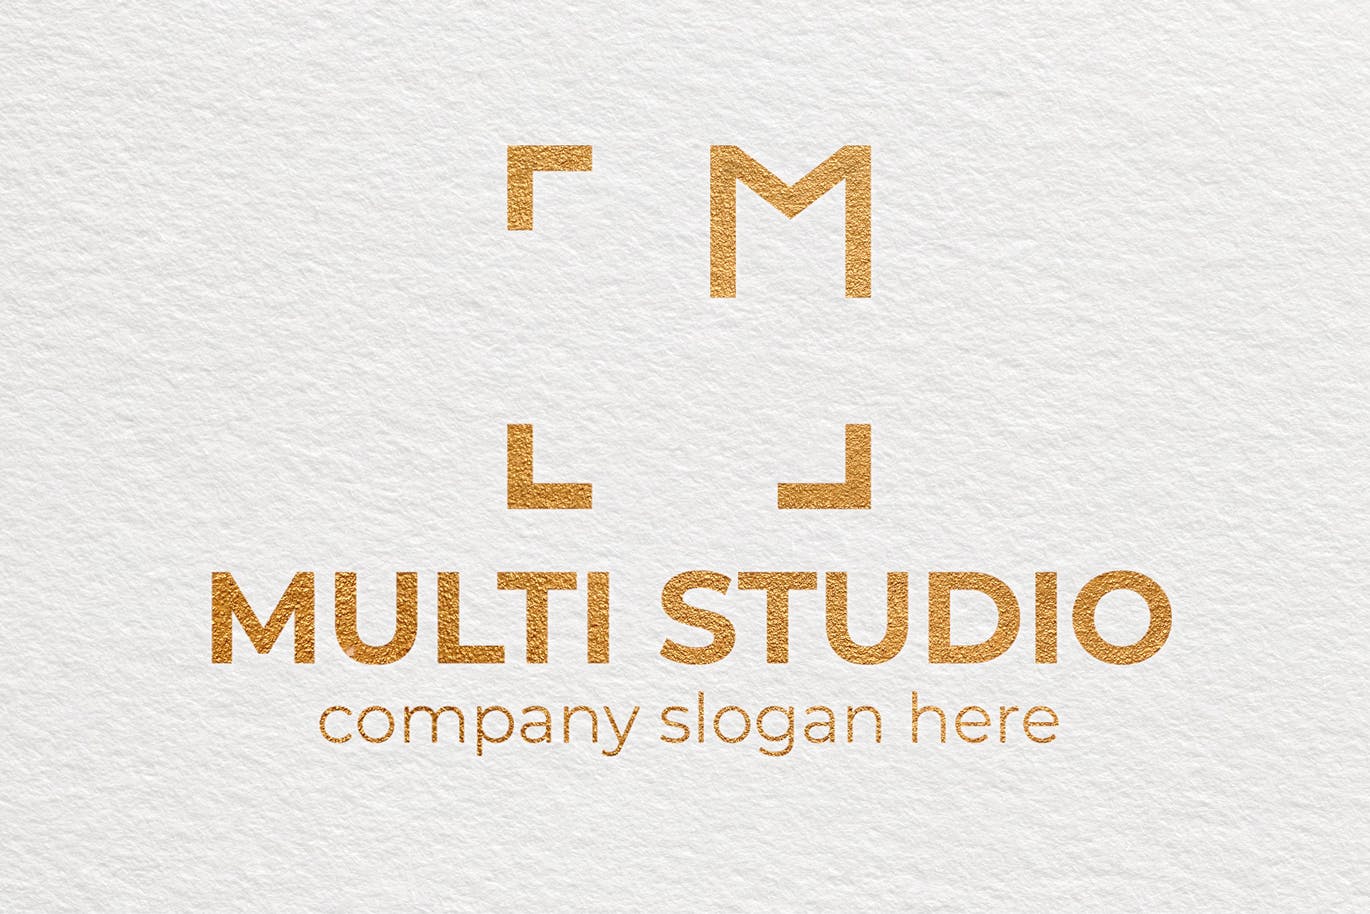 字母M创意图形企业品牌Logo设计素材库精选模板 Letter Based Business Logo Template插图(3)